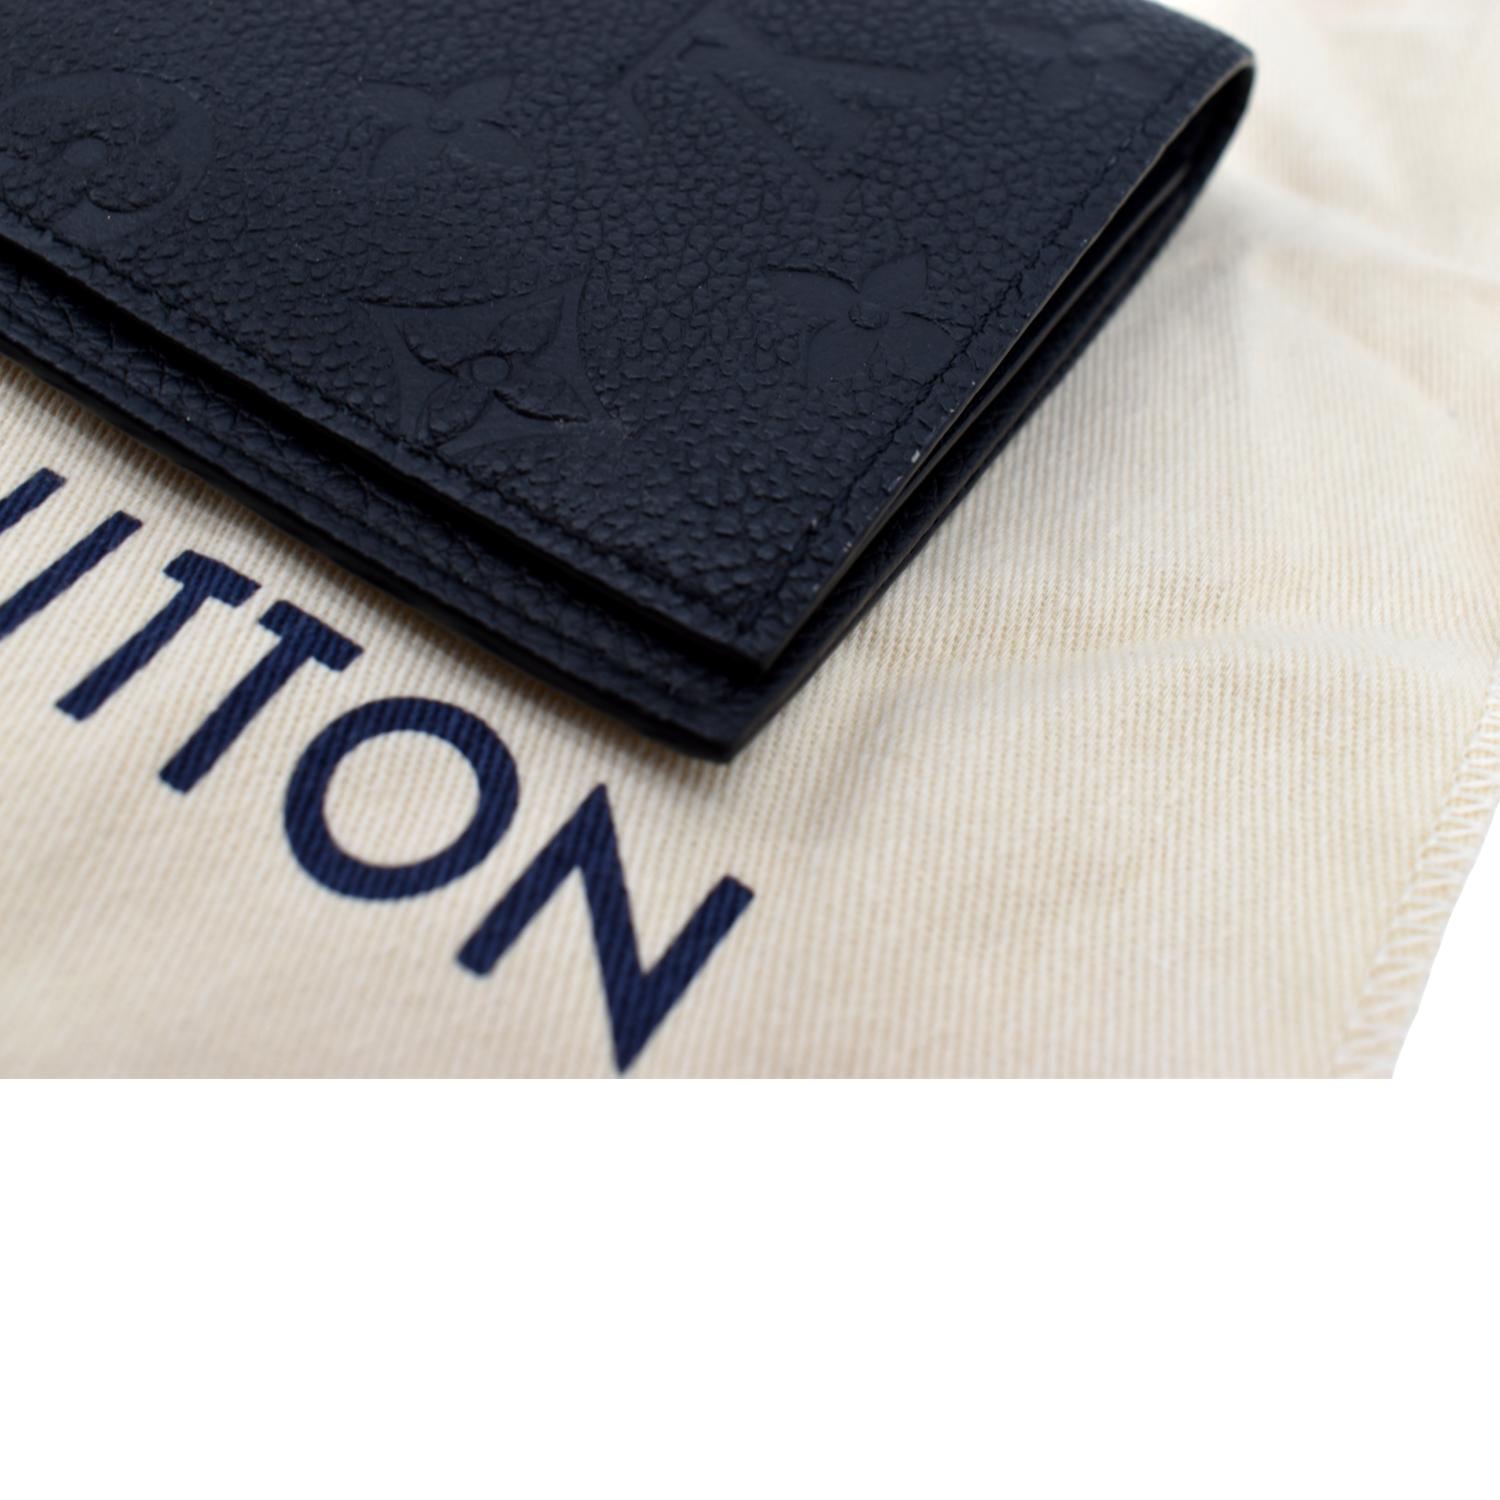 Louis Vuitton Monogram Empreinte Passport Cover, Black